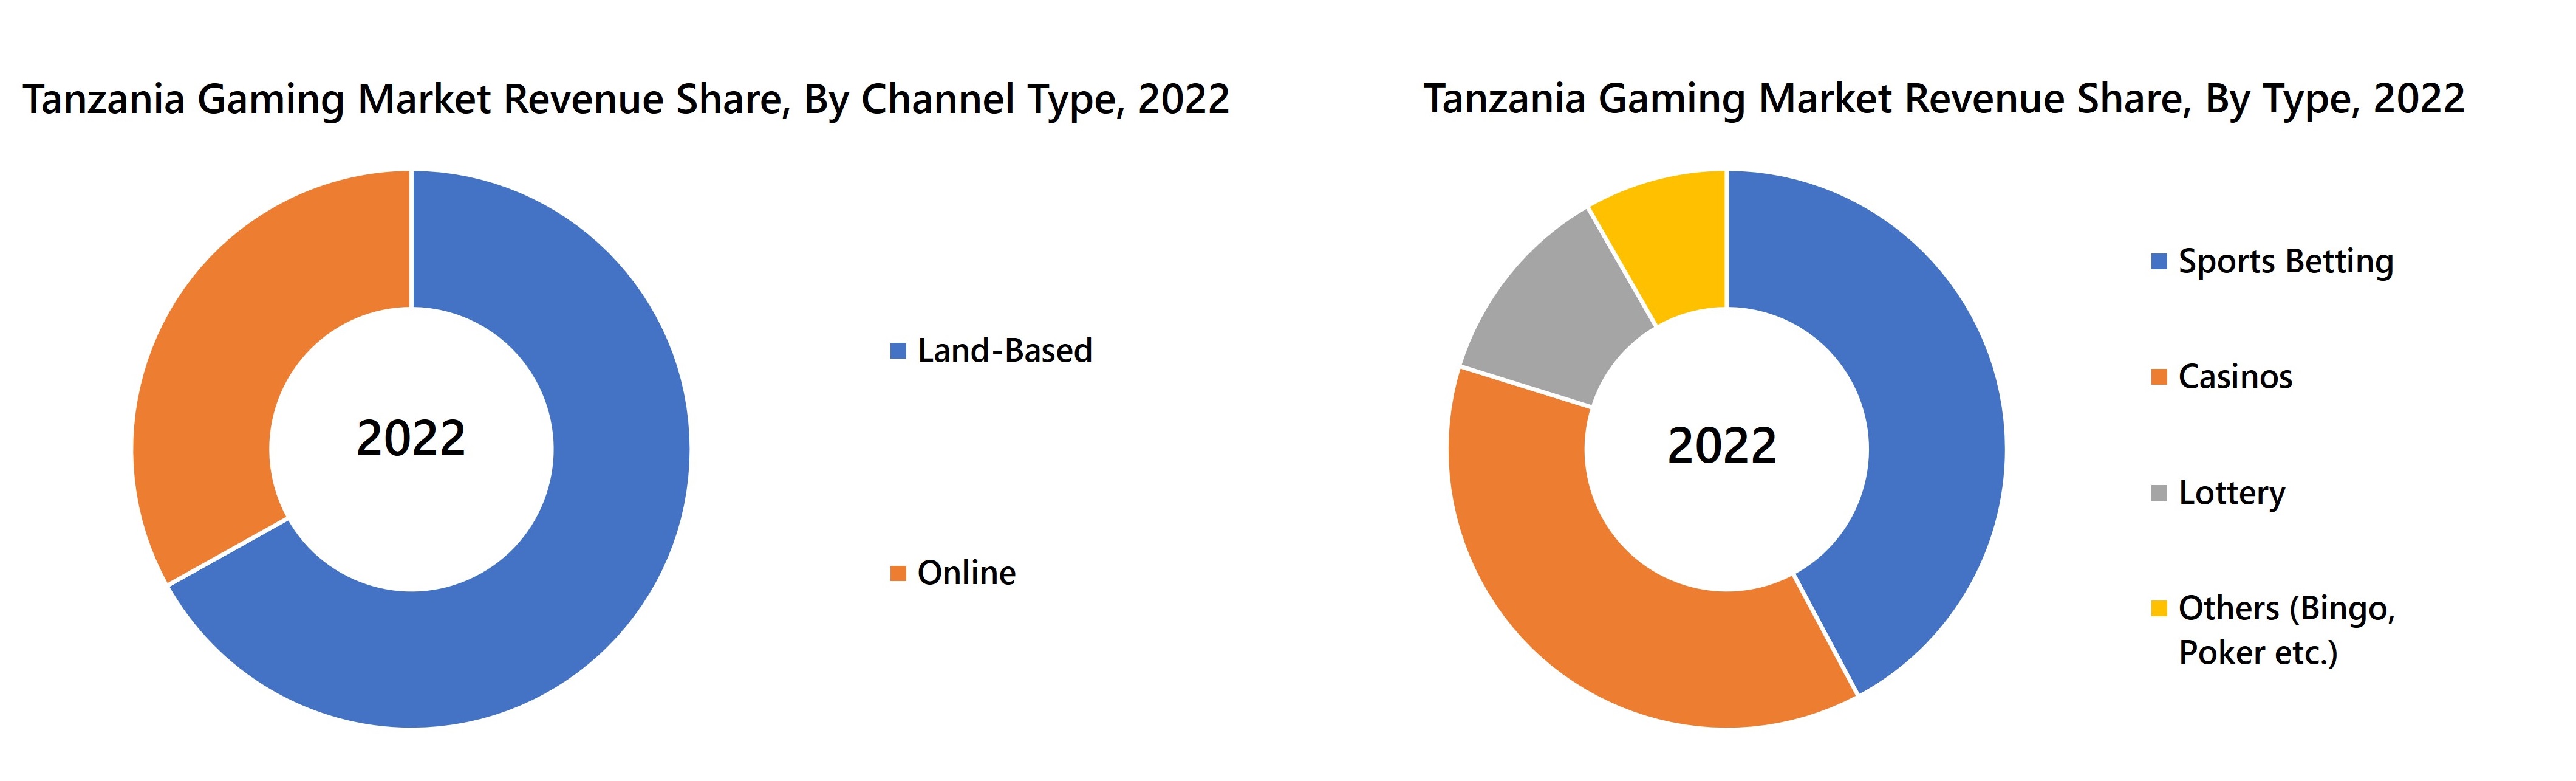 Tanzania Gaming Market Revenue Share